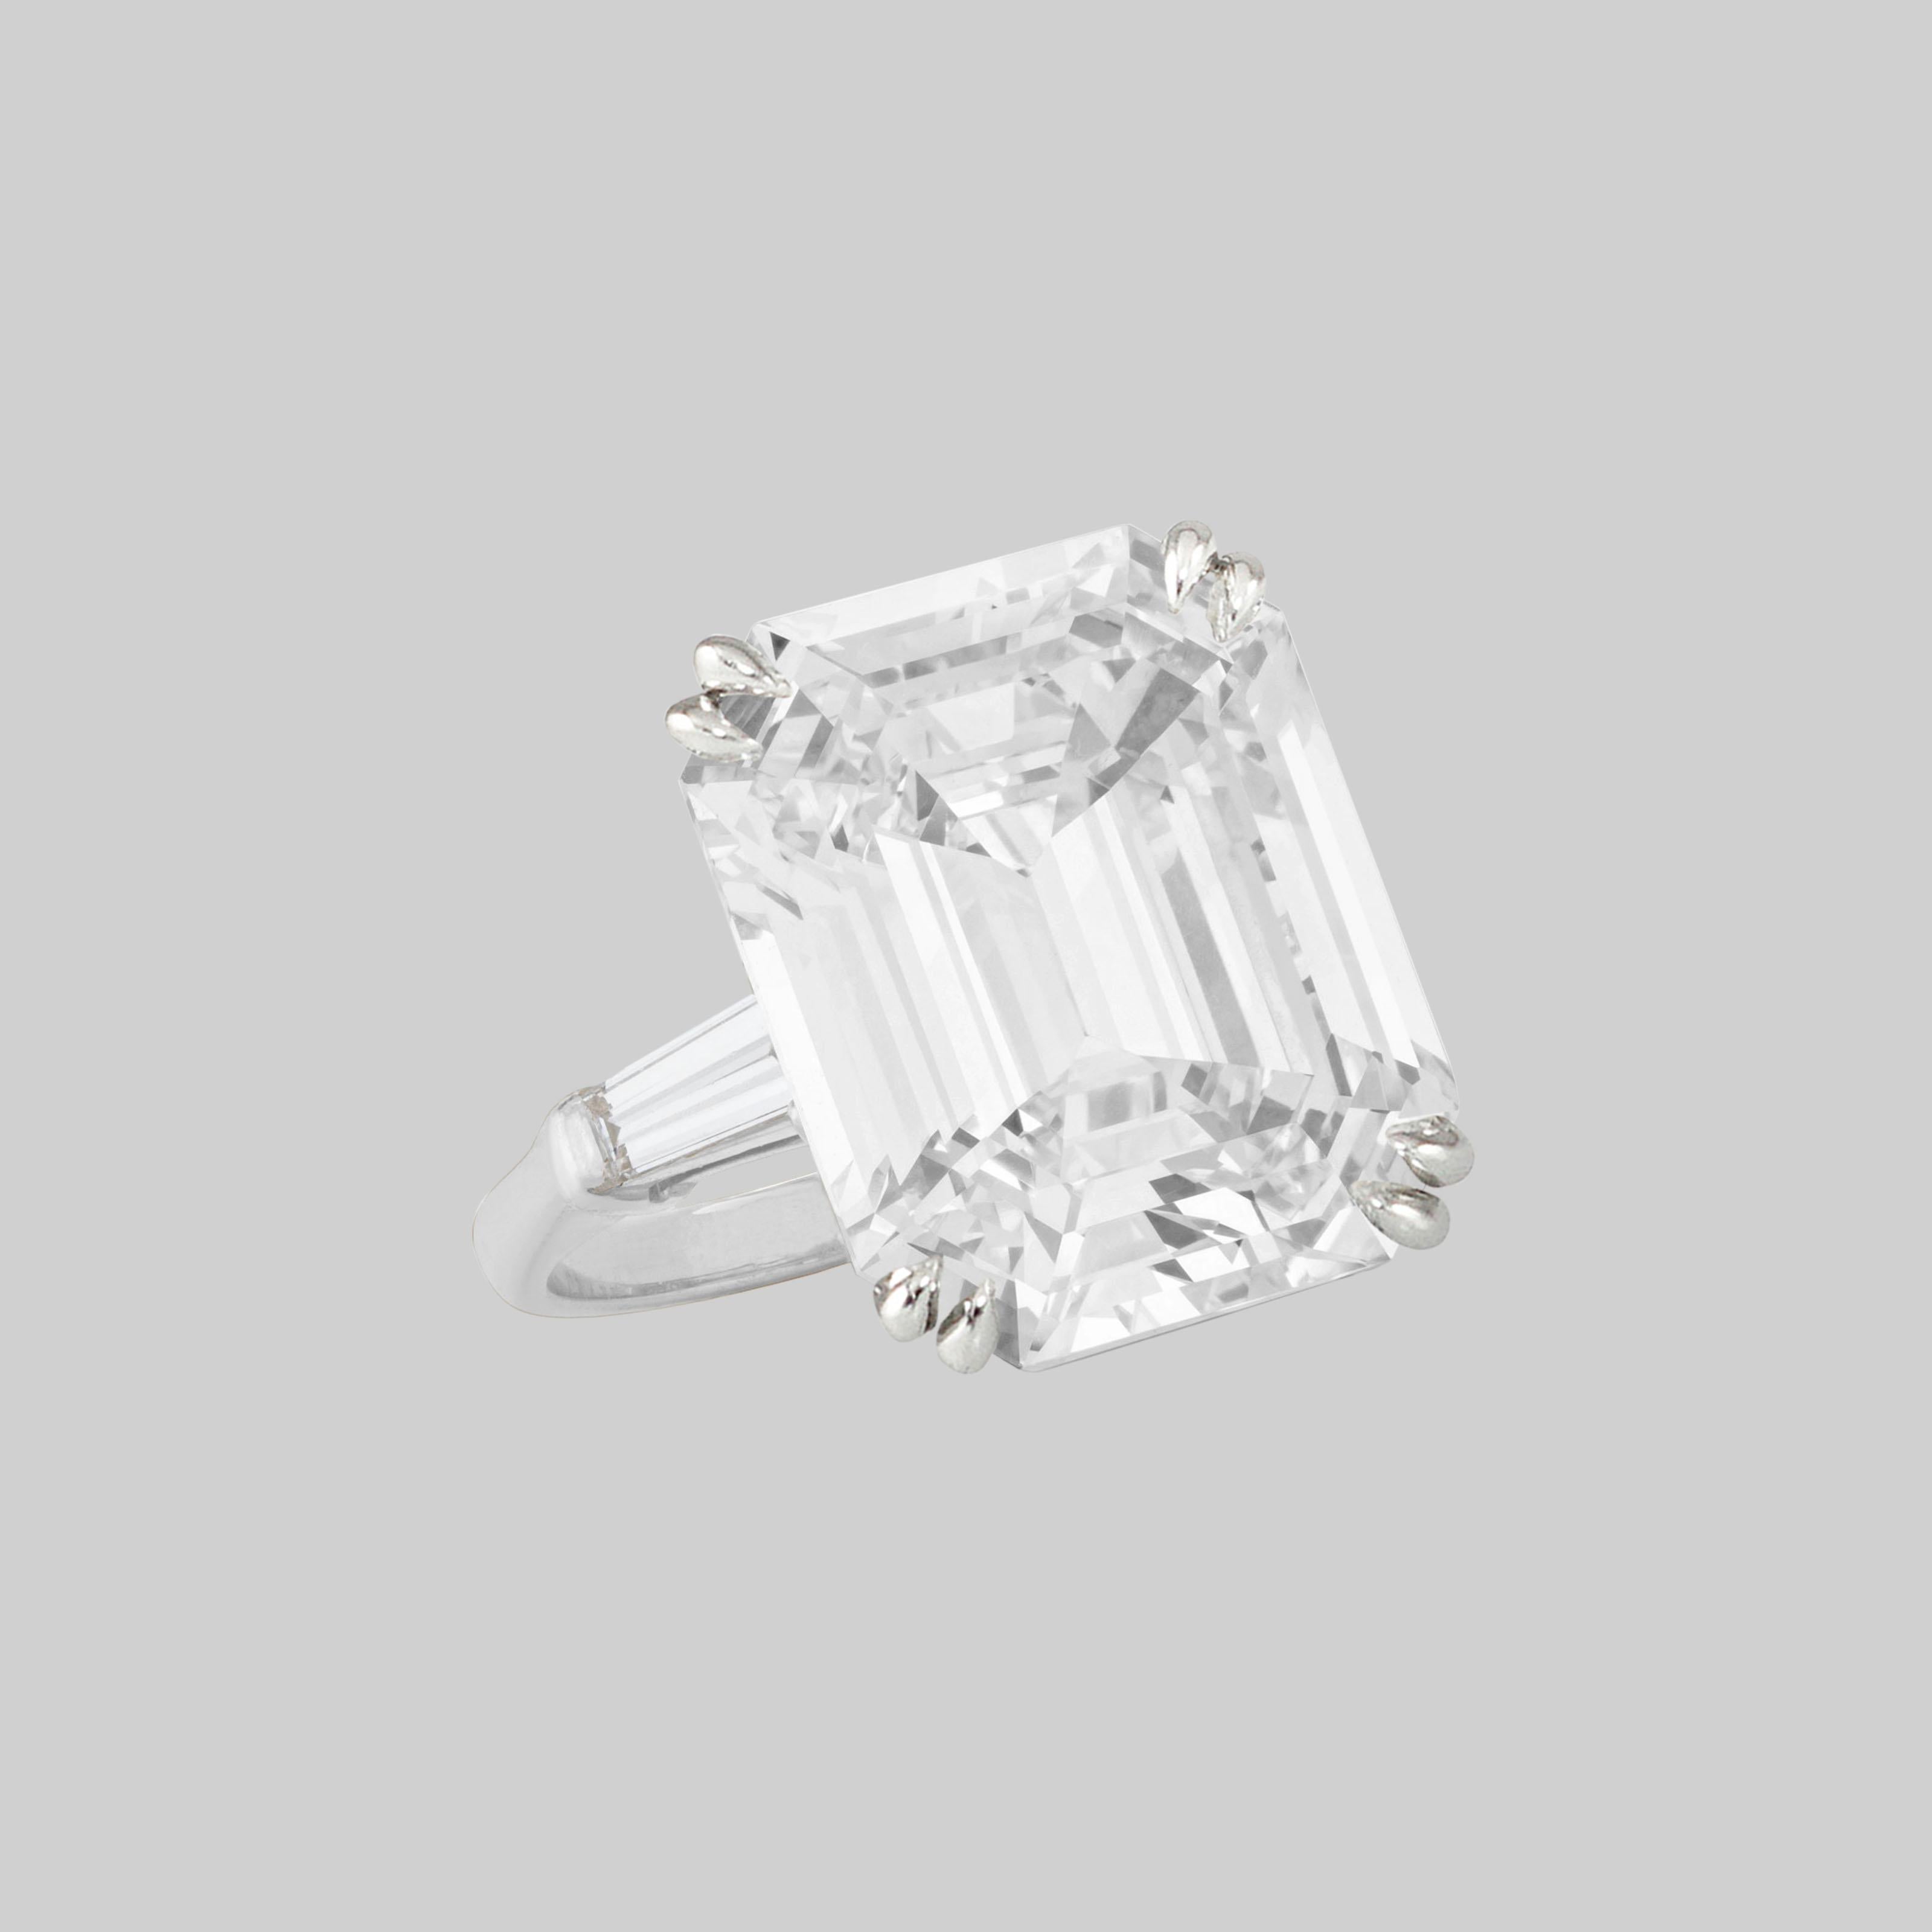 15 carat diamond